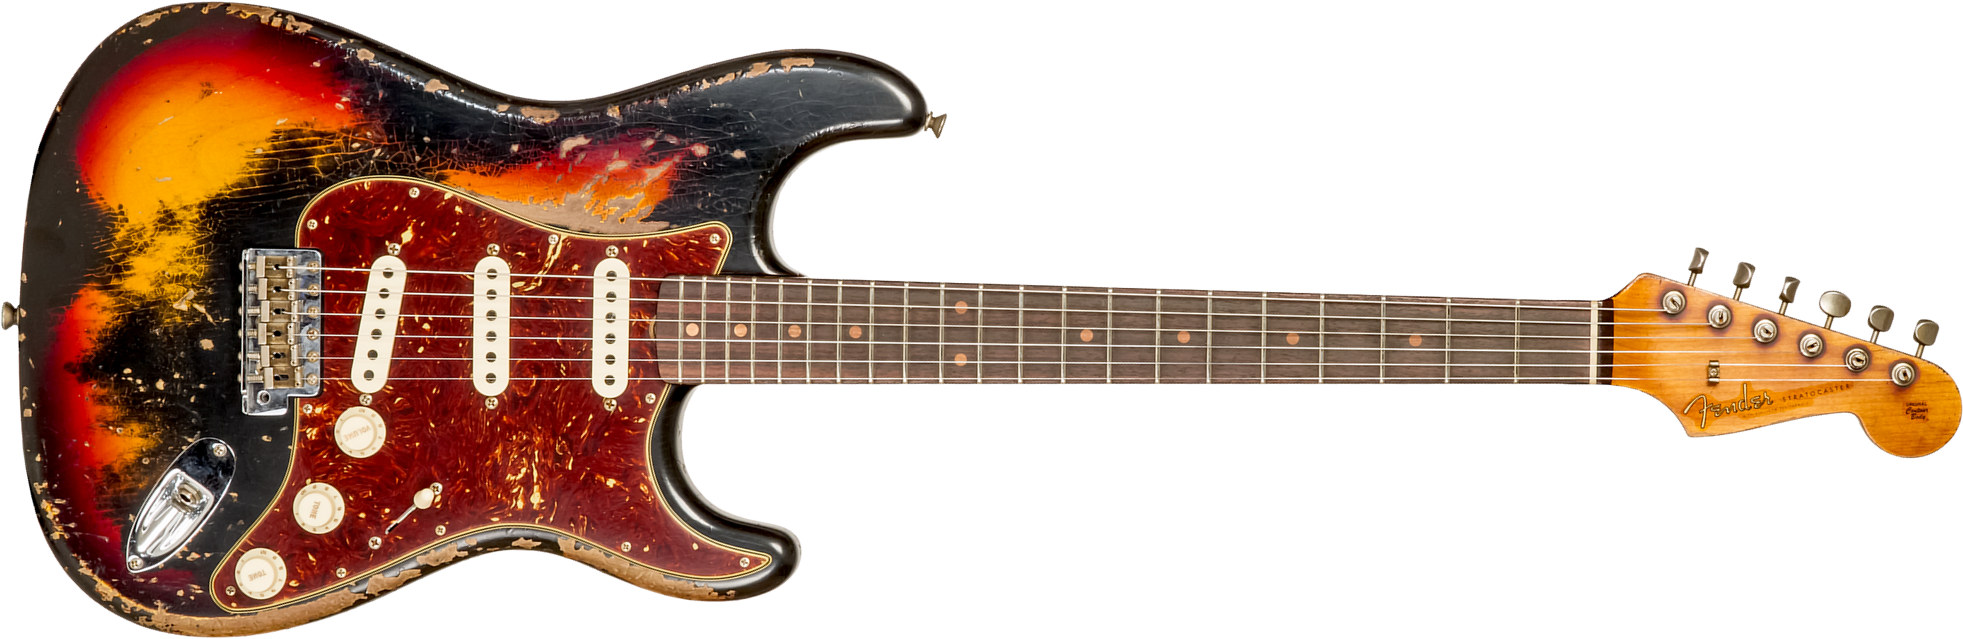 Fender Custom Shop Strat 1961 3s Trem Rw #cz576153 - Super Heavy Relic Black O. 3-color Sunburst - Str shape electric guitar - Main picture